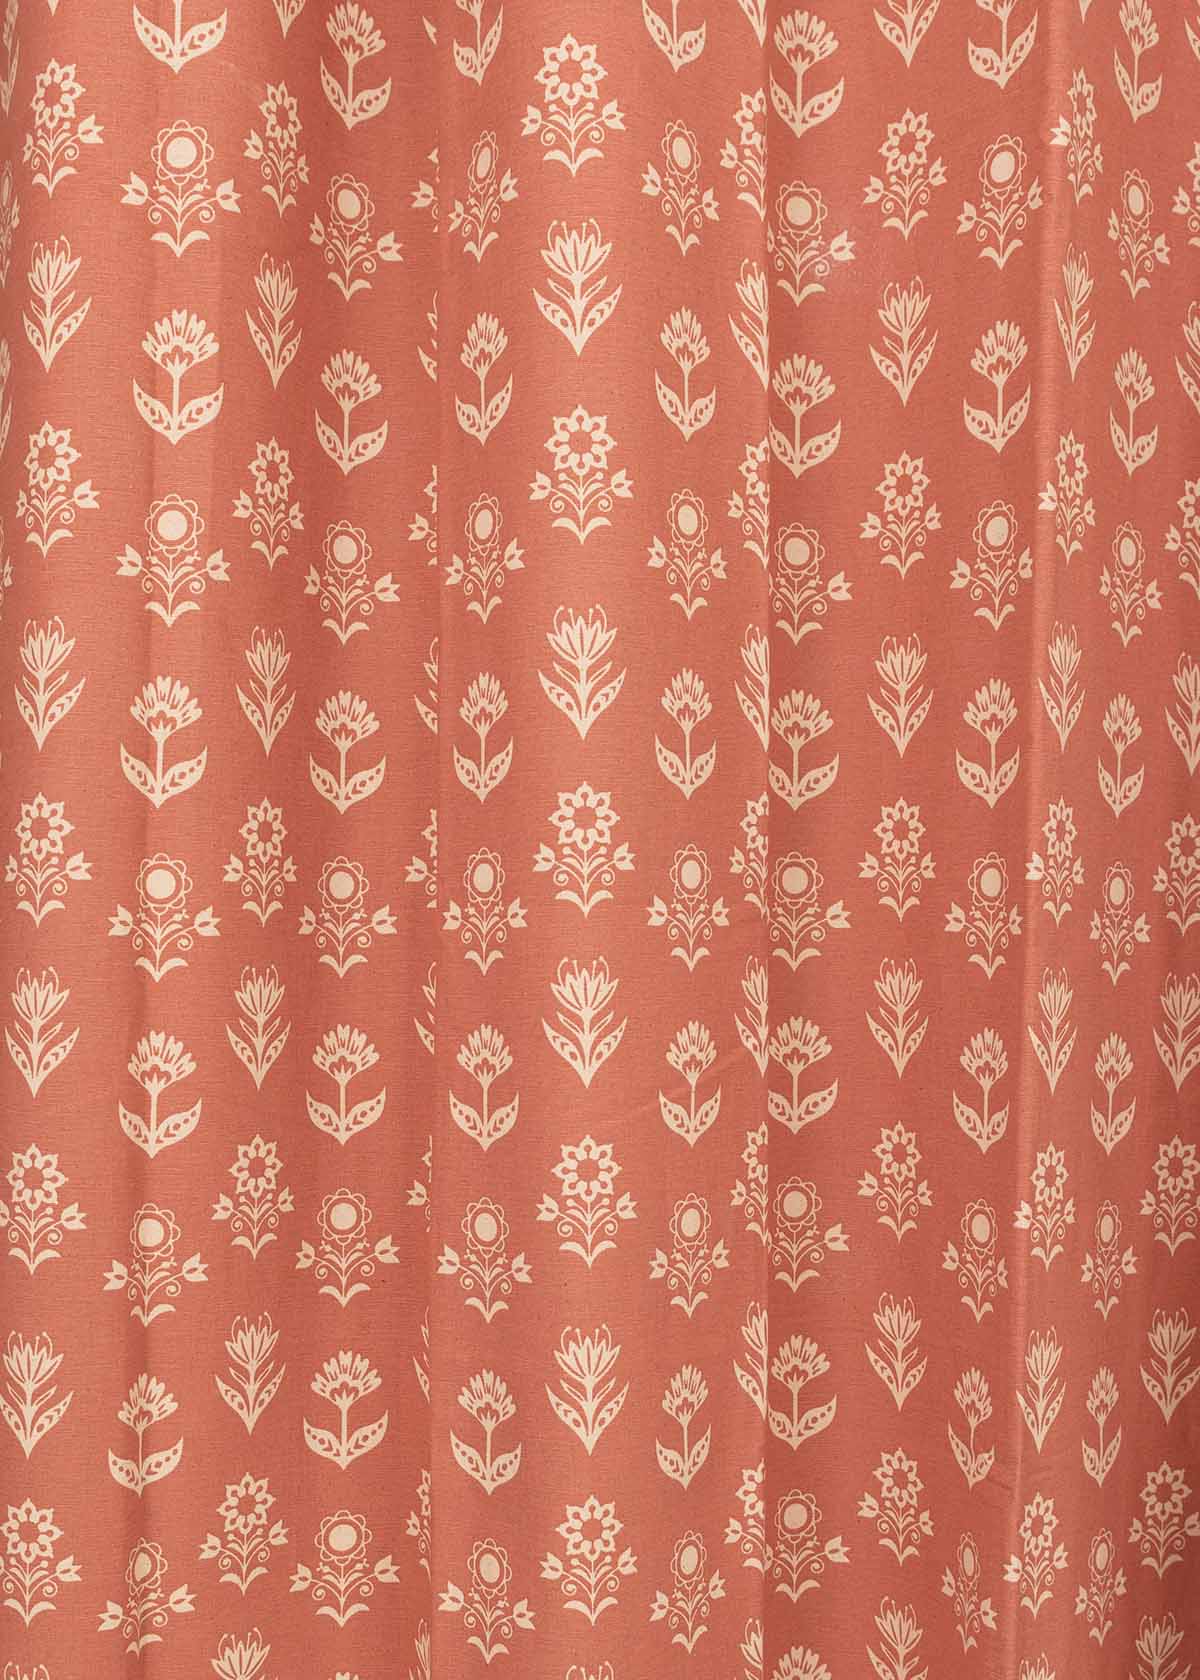 Dahlia Printed Cotton Curtain - Rust - Single